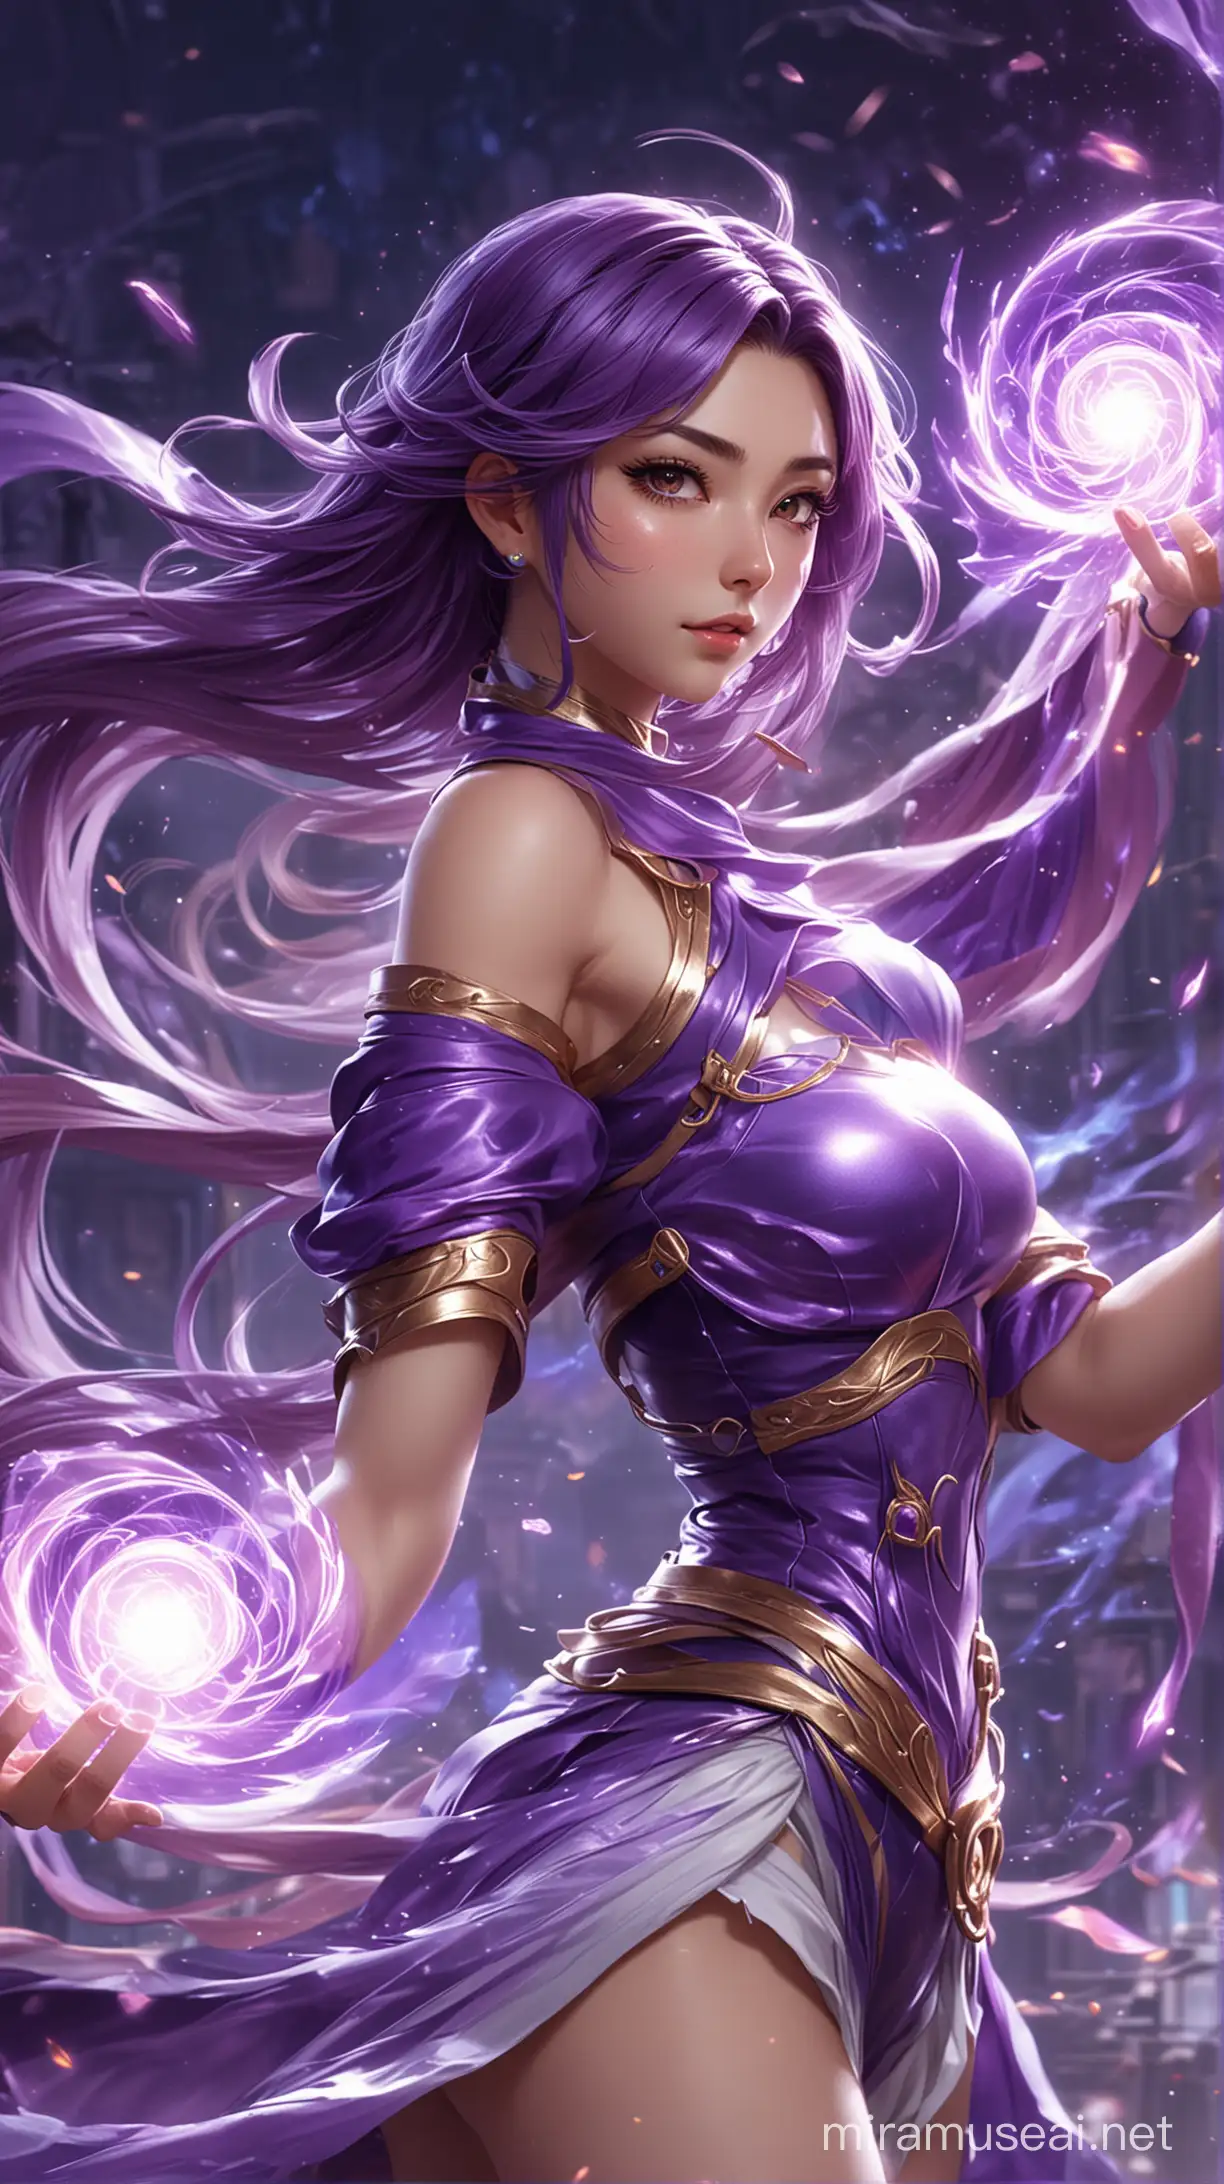 Anime Illustration Mobile Legends Miya with Swirling Purple Energy Aura